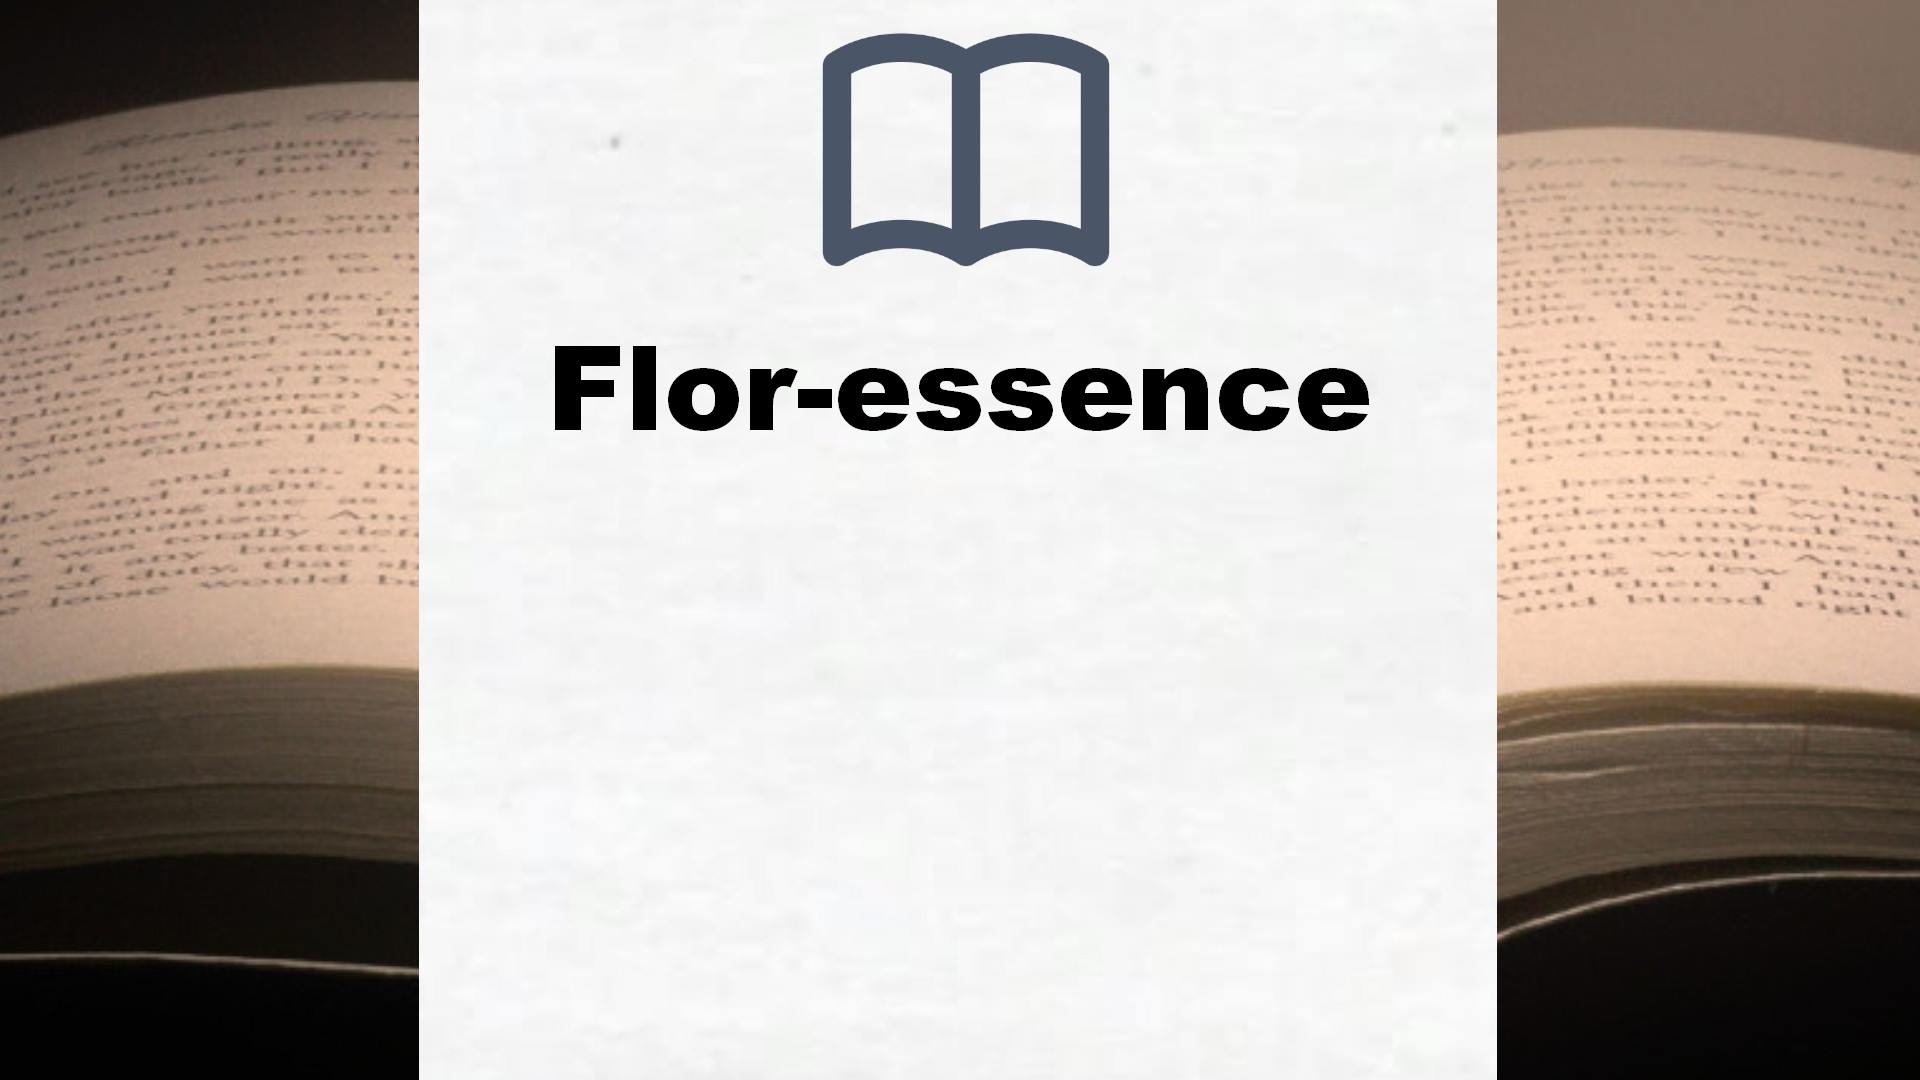 Bücher über Flor-essence